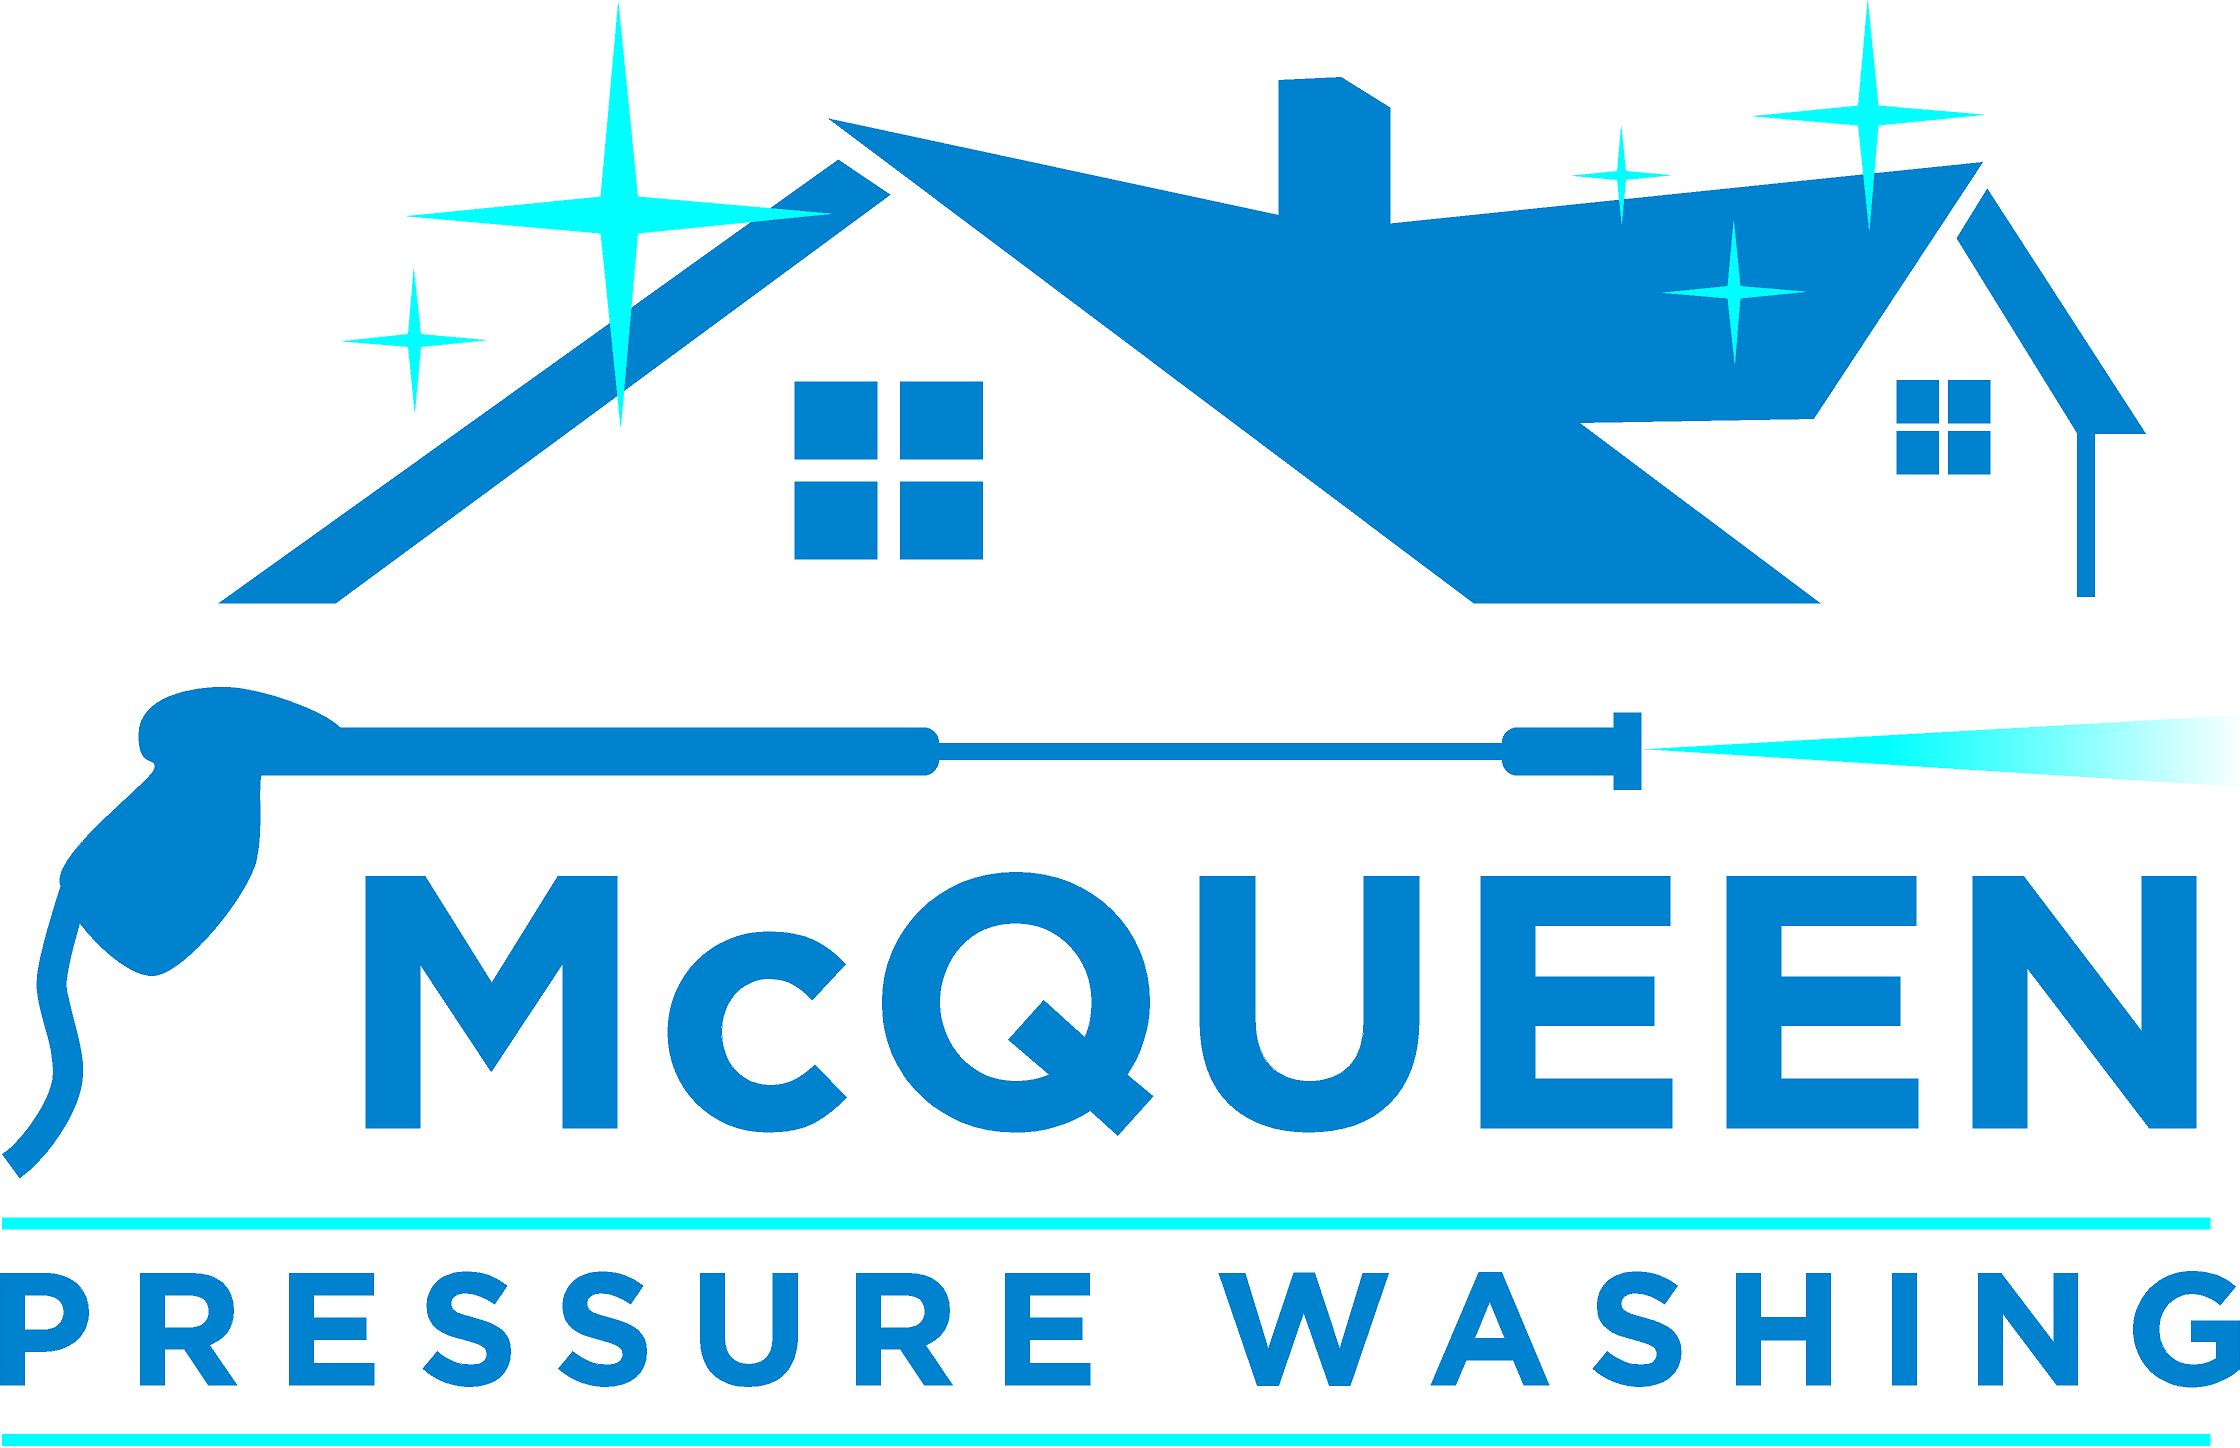 McQueen Pressure Washing logo maker and design